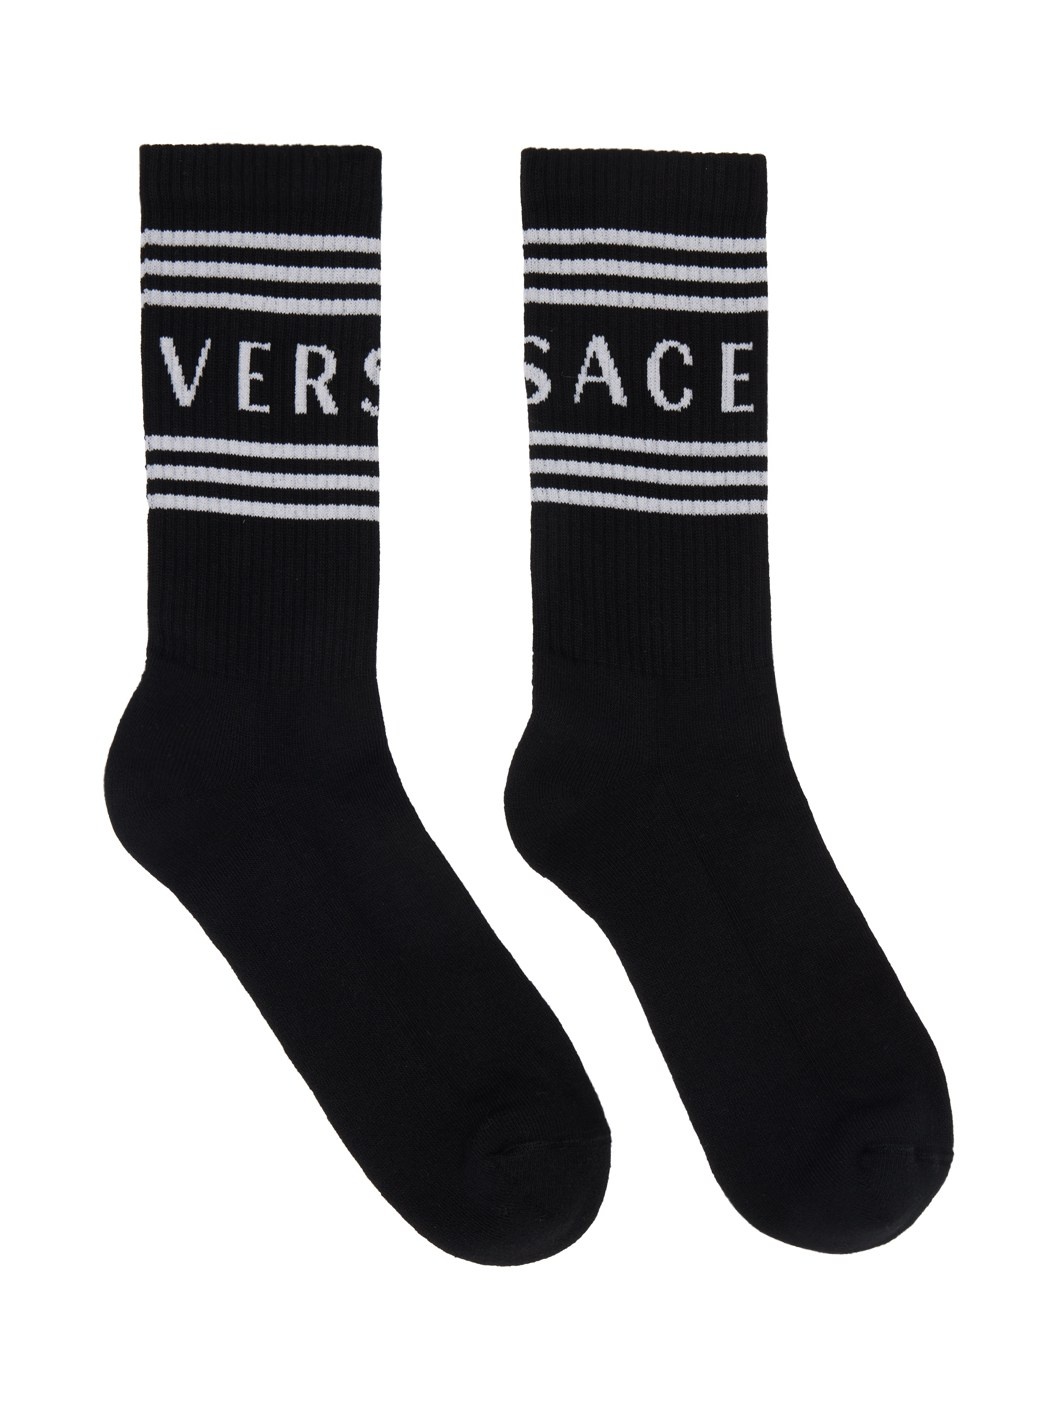 Black & White 90s Vintage Logo Socks - 1